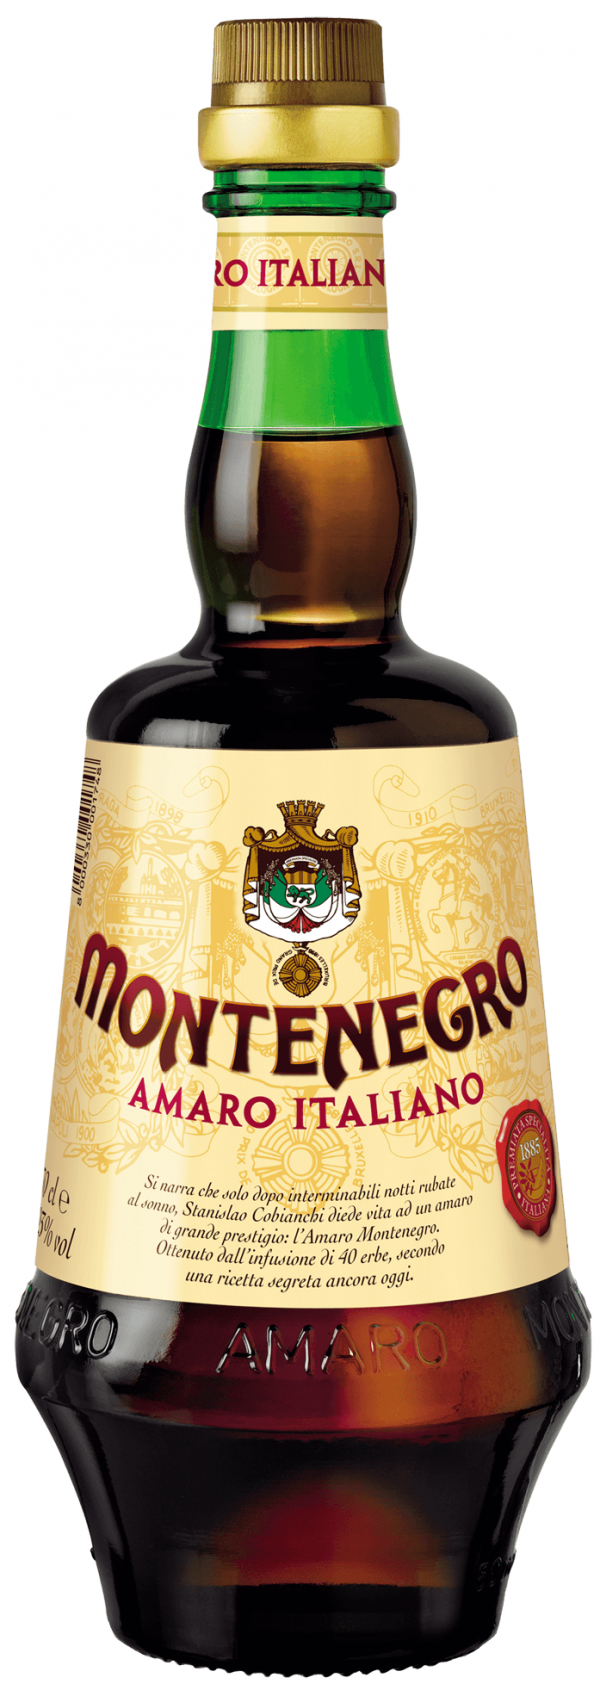 Zoom to enlarge the Montenegro Amaro 6 / Case